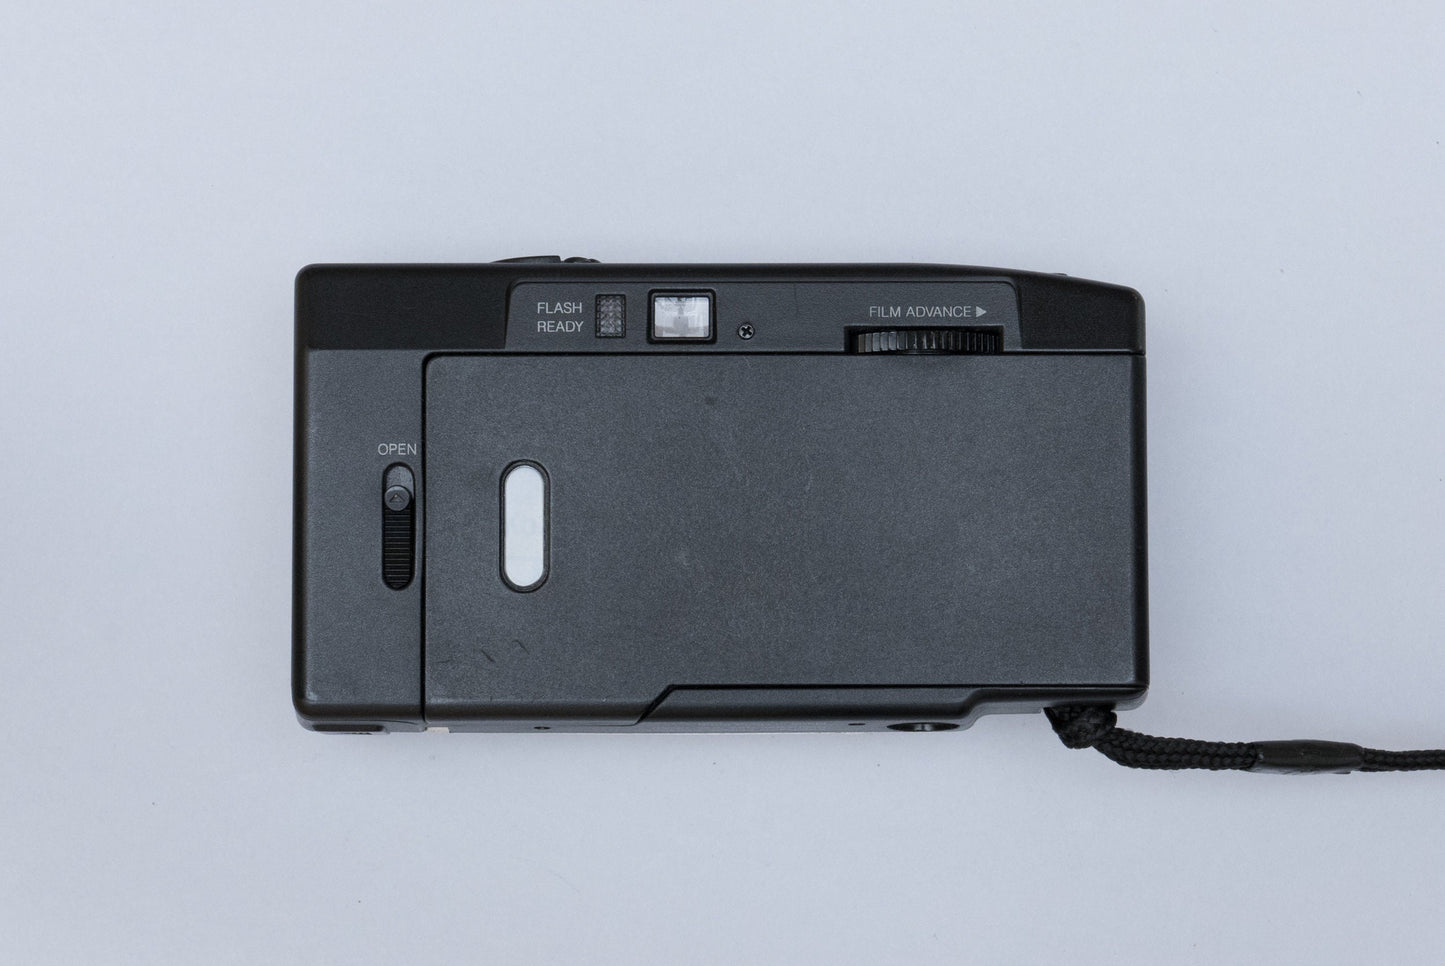 Kodak BreeZe 35mm Compact Point and Shoot Film Camera